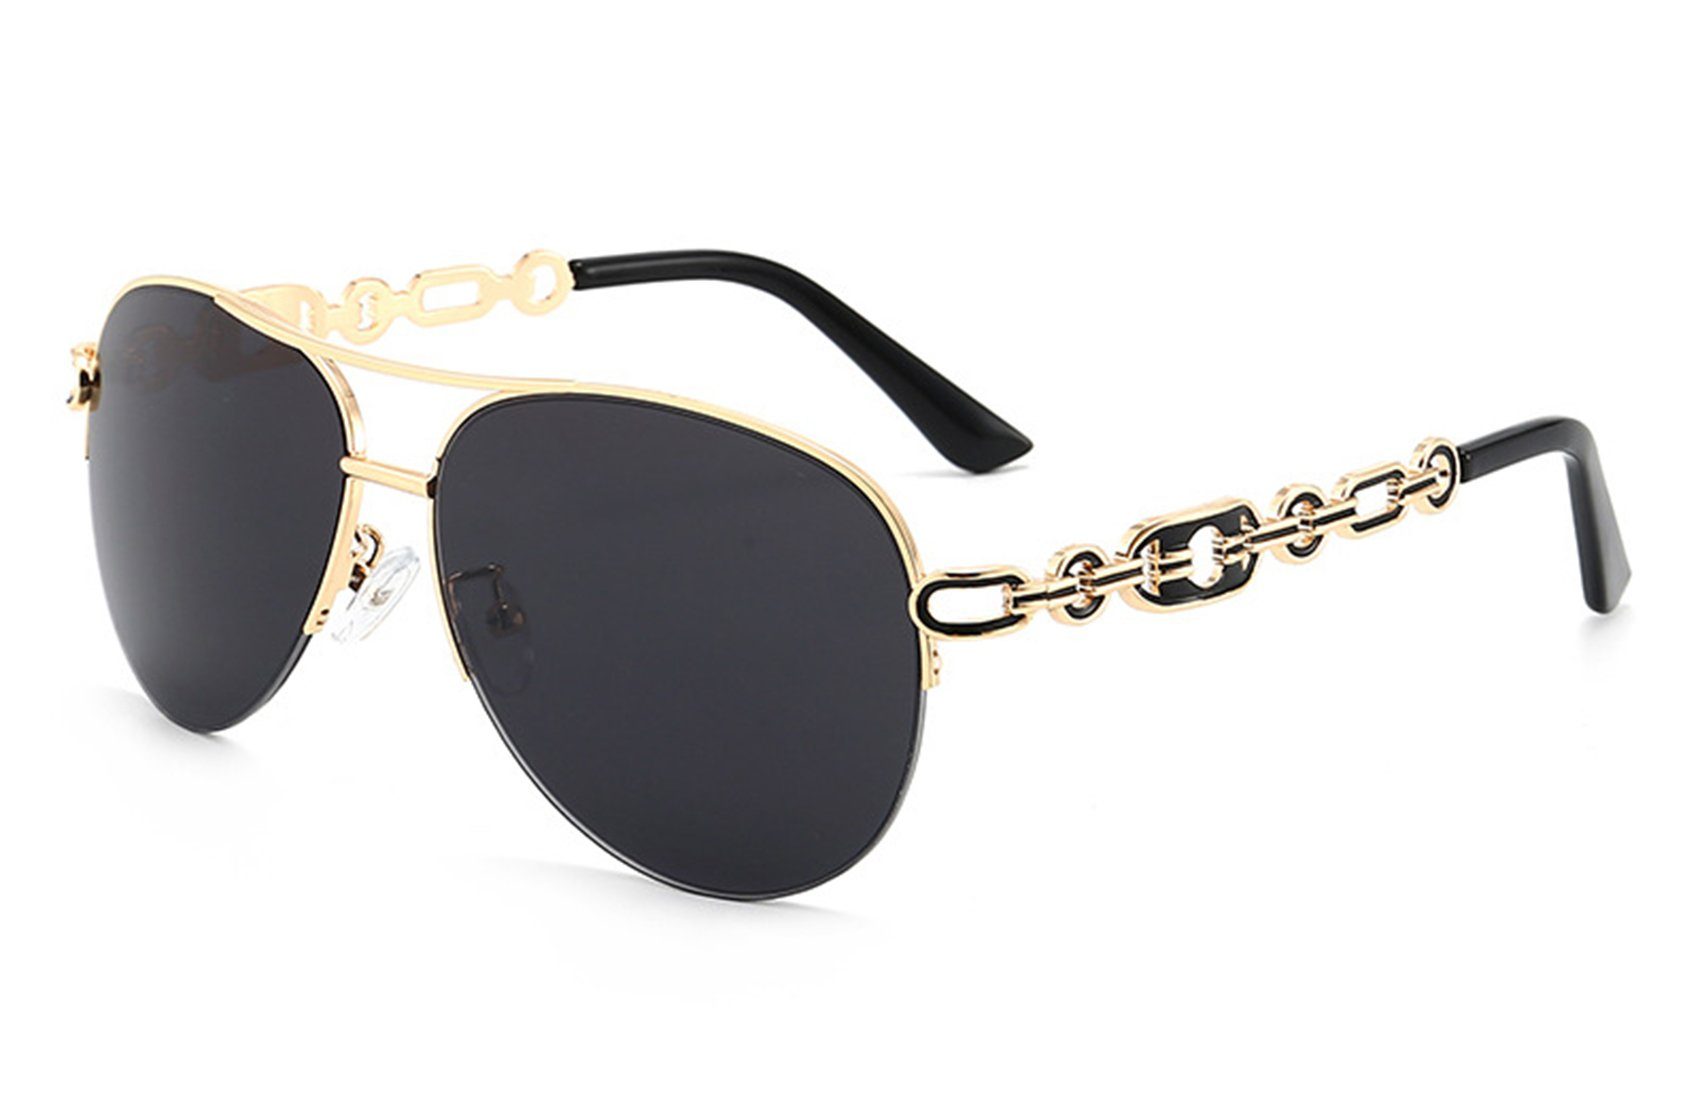 Haiaveng Sonnenbrille Verspiegelte Sonnenbrille Damen UV400 Brille Vintage Pilotenbrille Retro Sunglasses Damen black